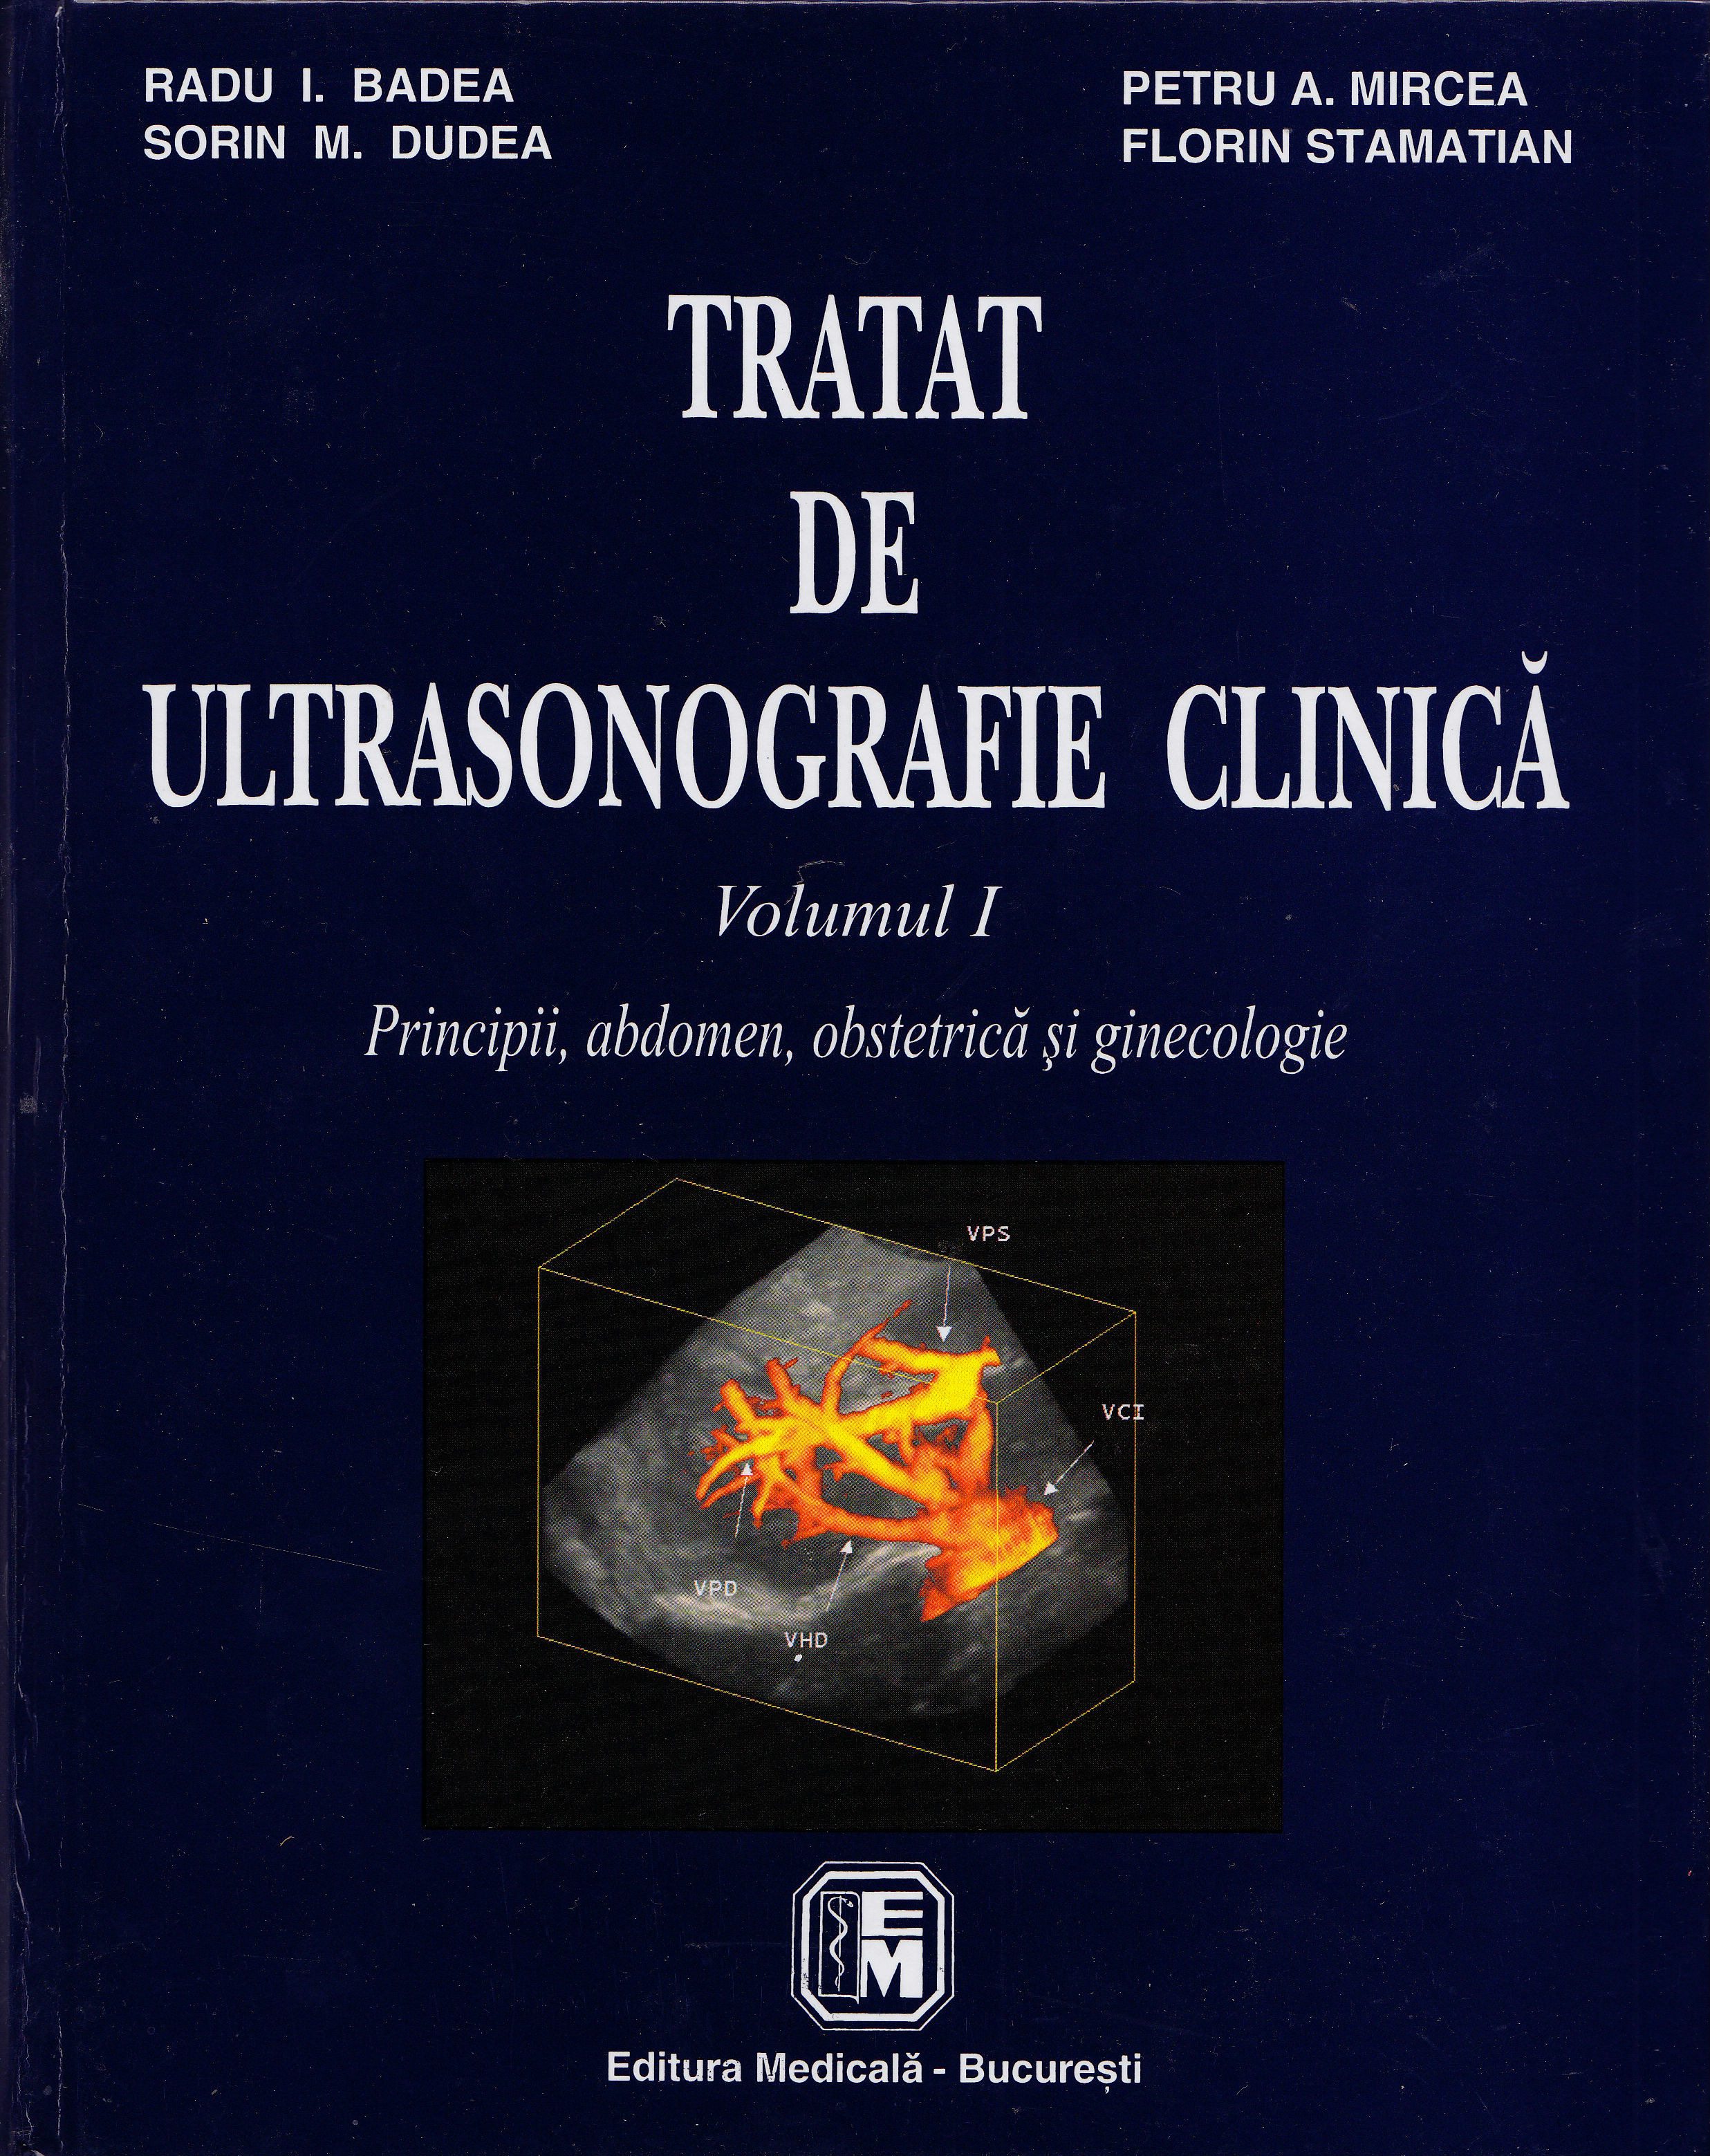 Tratat de ultrasonografie clinica fara CD - Volumul I - Radu I. Badea, Petru A. Mircea